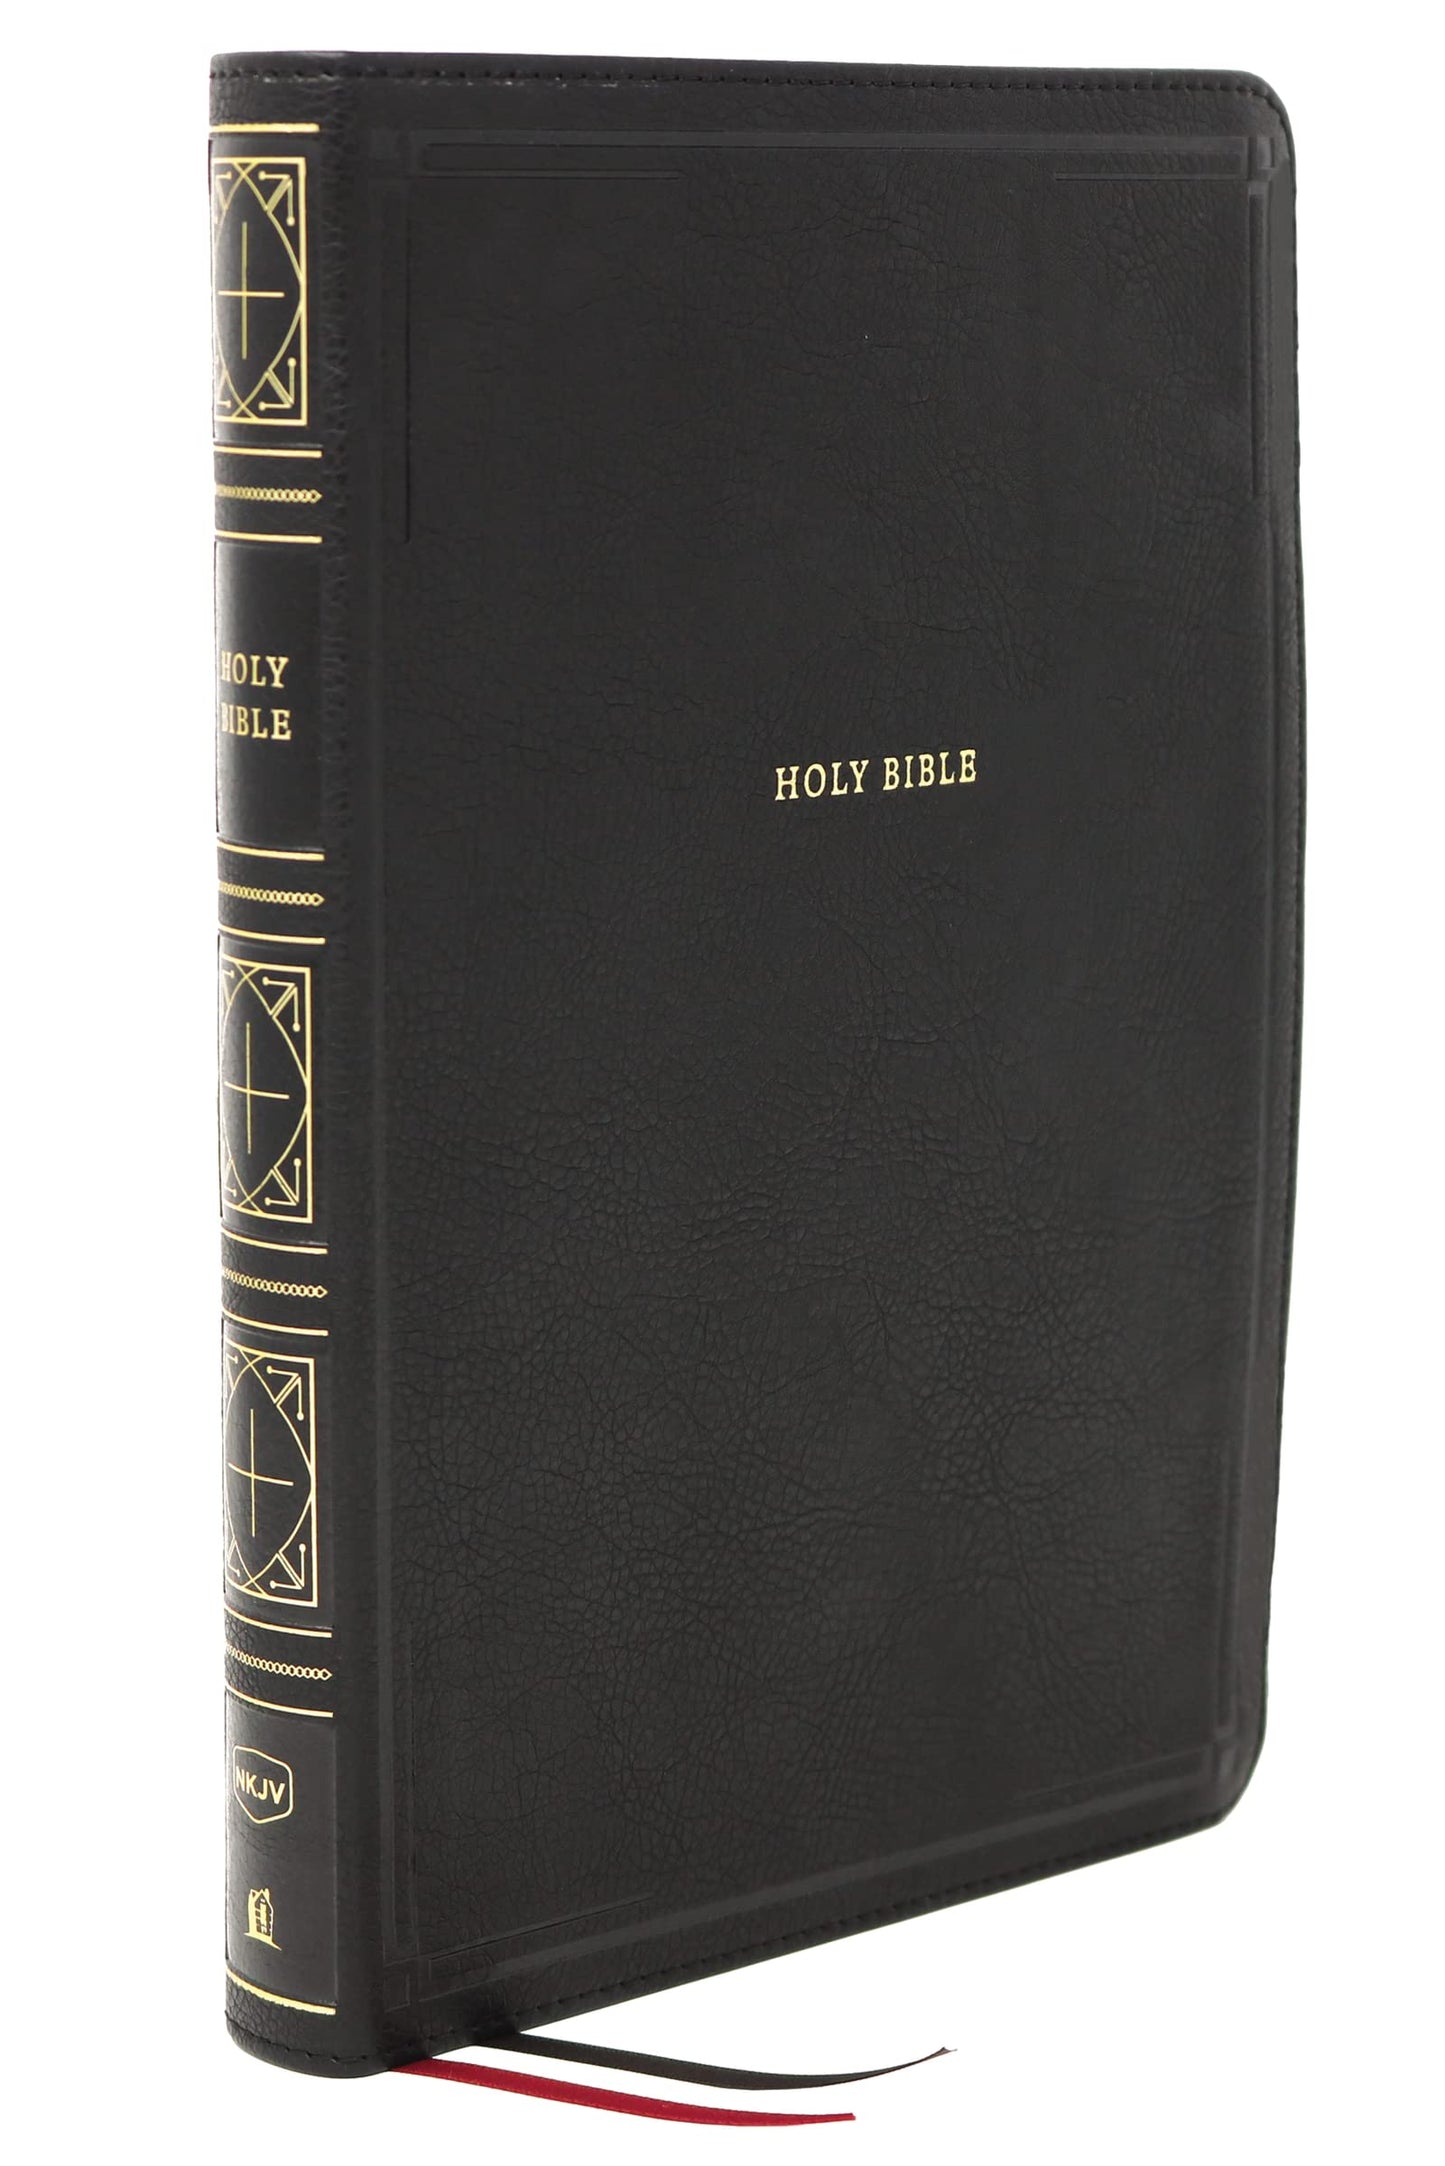 NKJV Holy Bible, Giant Print Thinline Bible